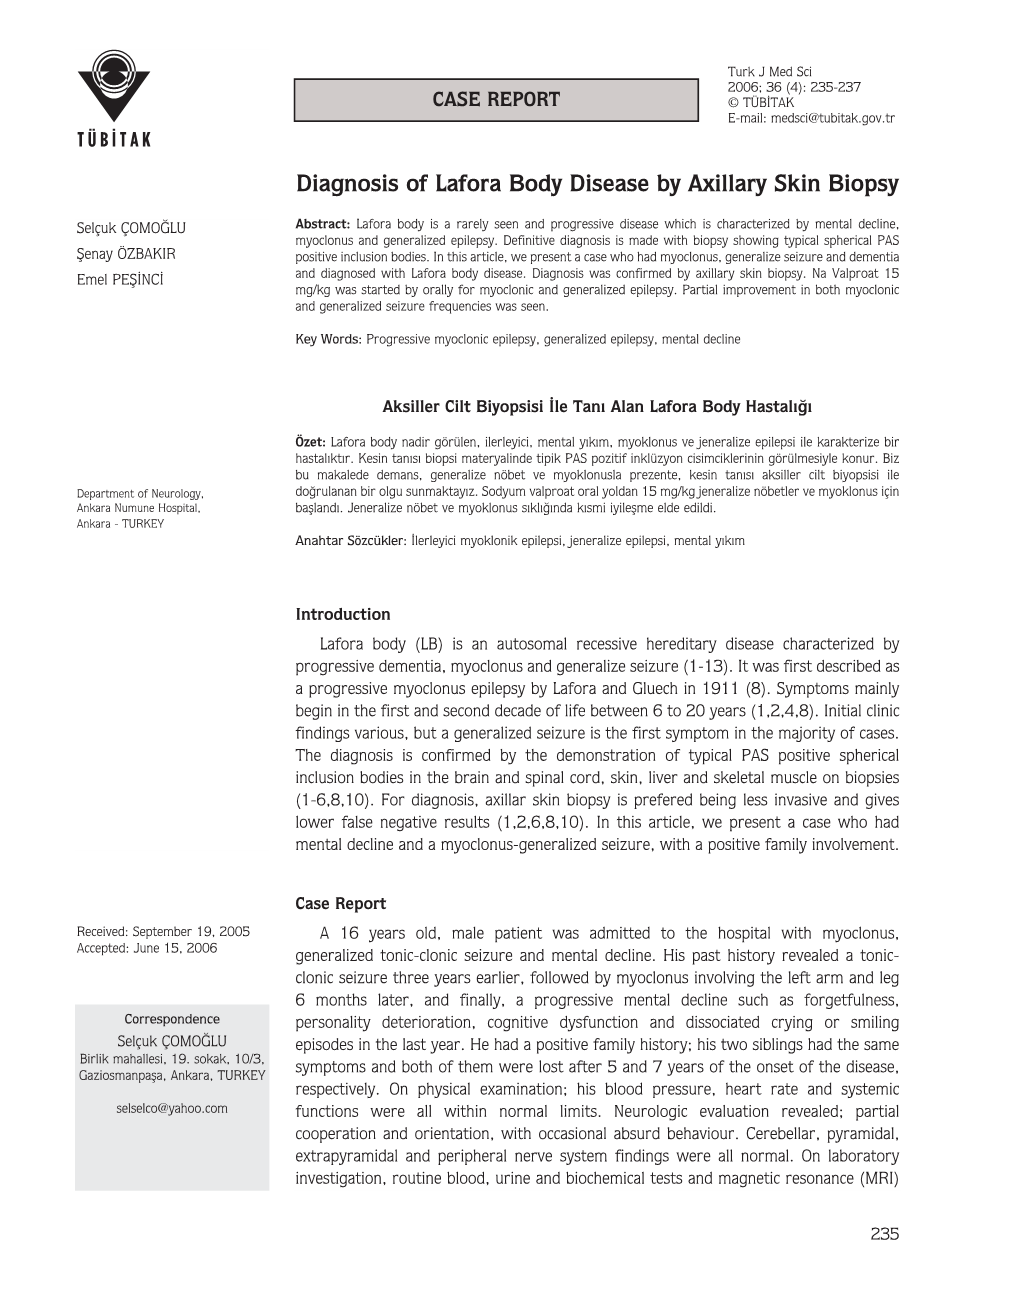 Diagnosis of Lafora Body Disease by Axillary Skin Biopsy